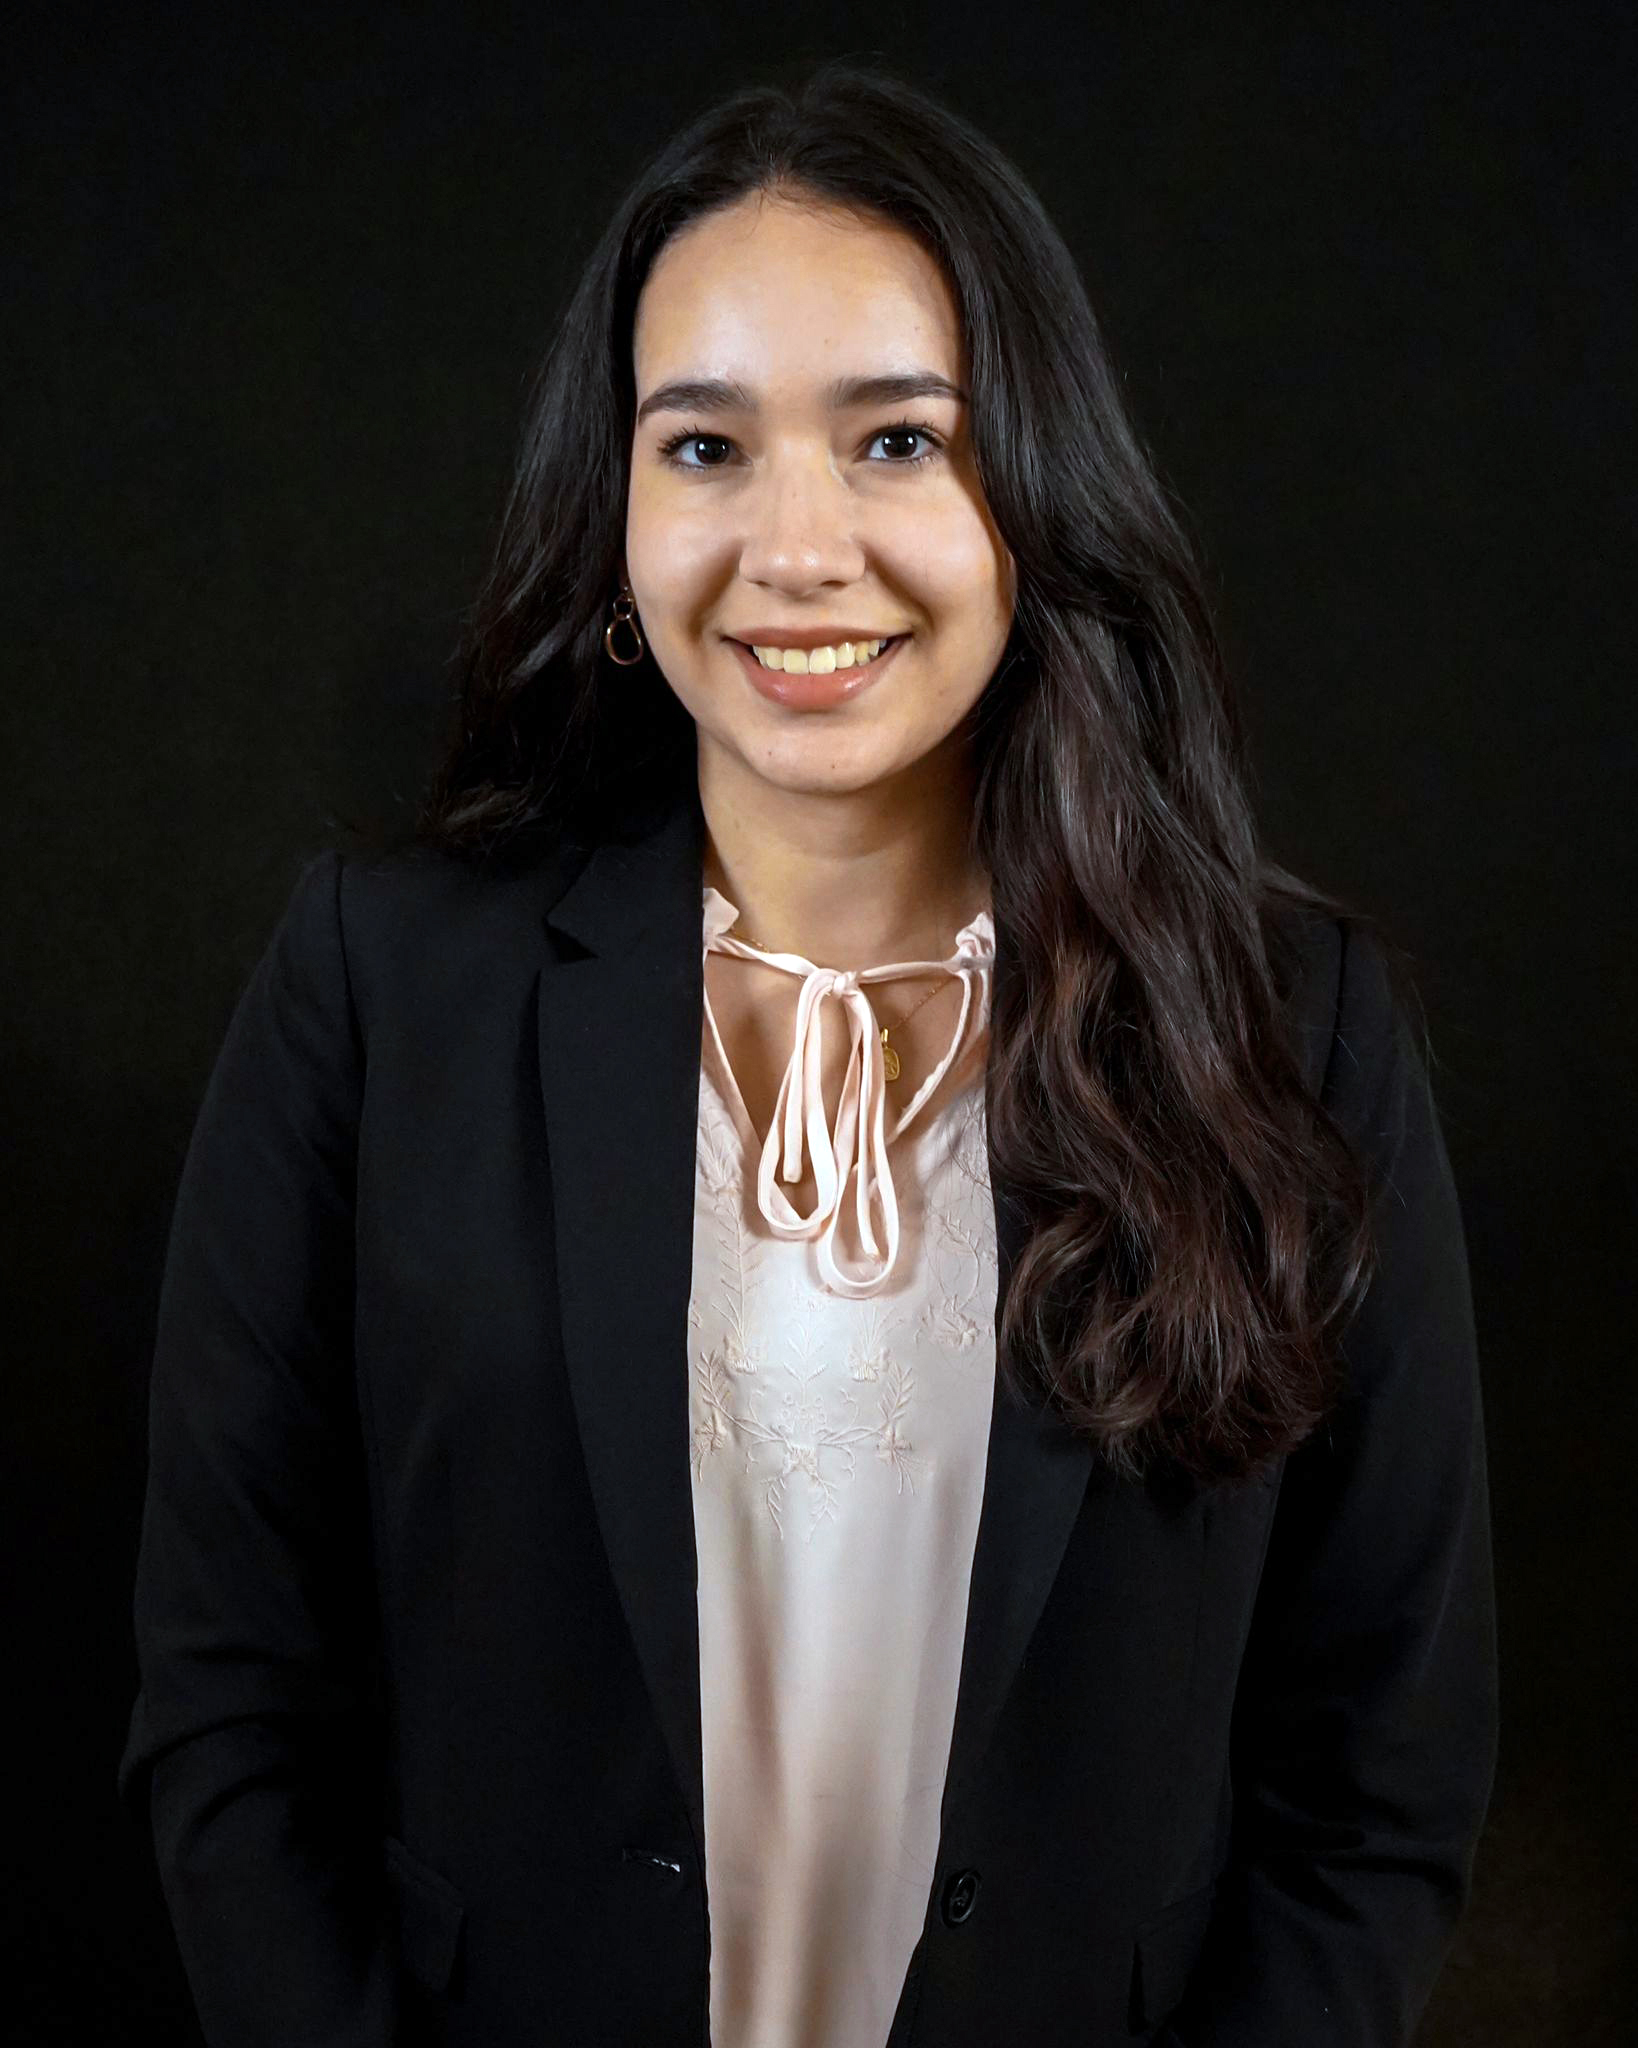 The Honors College graduate Victoria Moreno enrolls in Harvard Law School